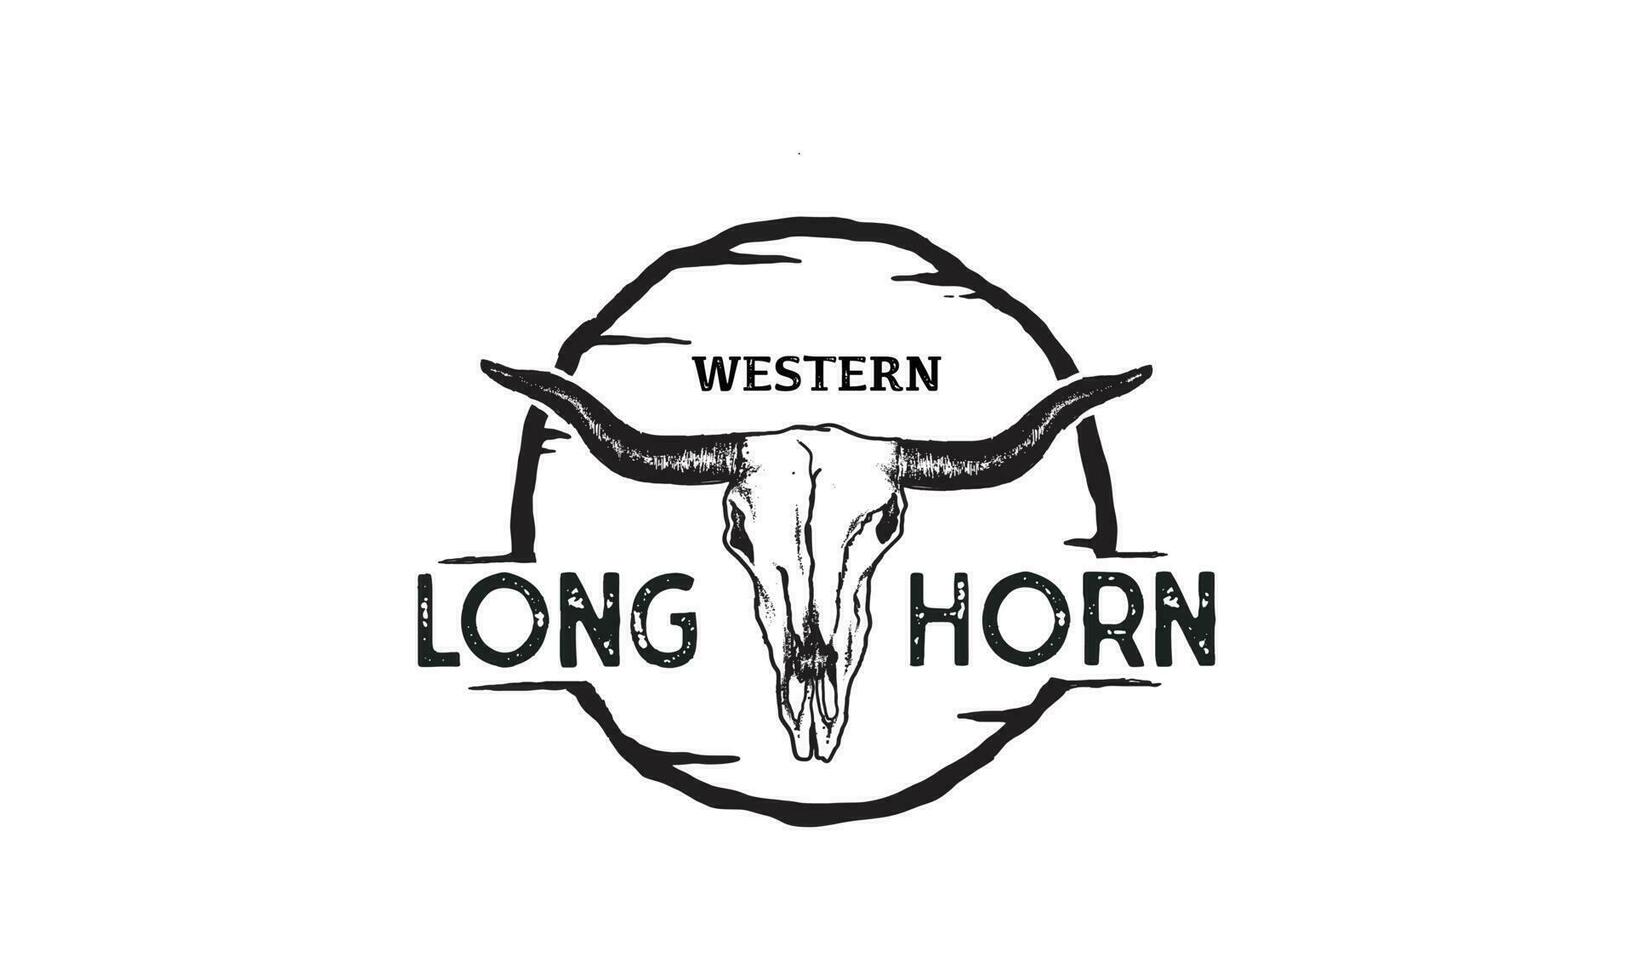 Texas Longhorn, Country Western Bull Cattle Vintage Label Logo Design vektor